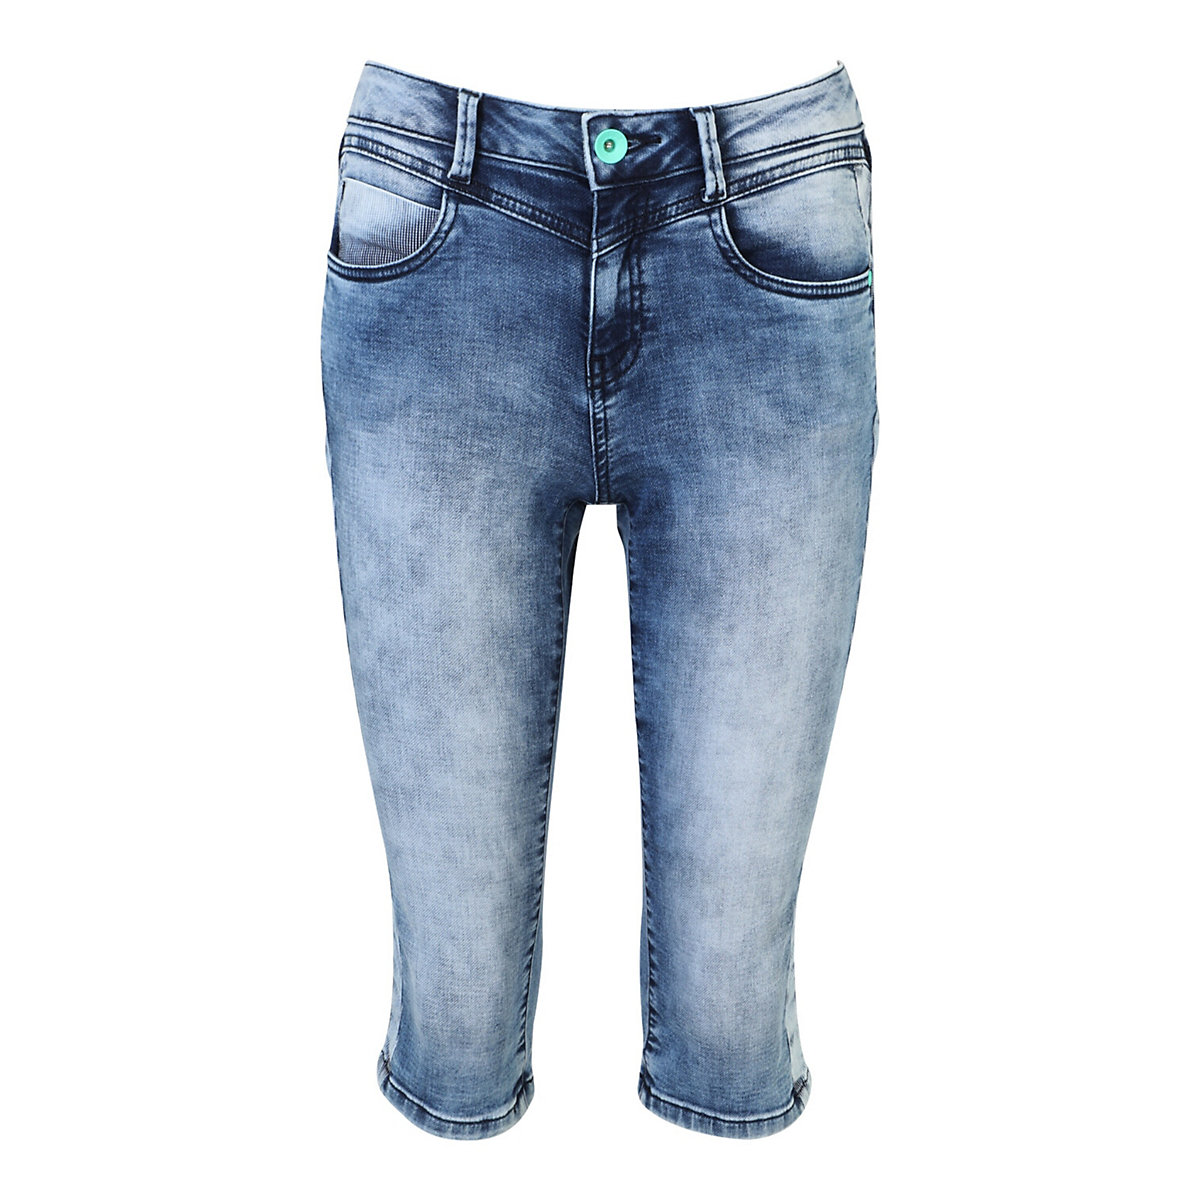 Soccx Jeans blue denim